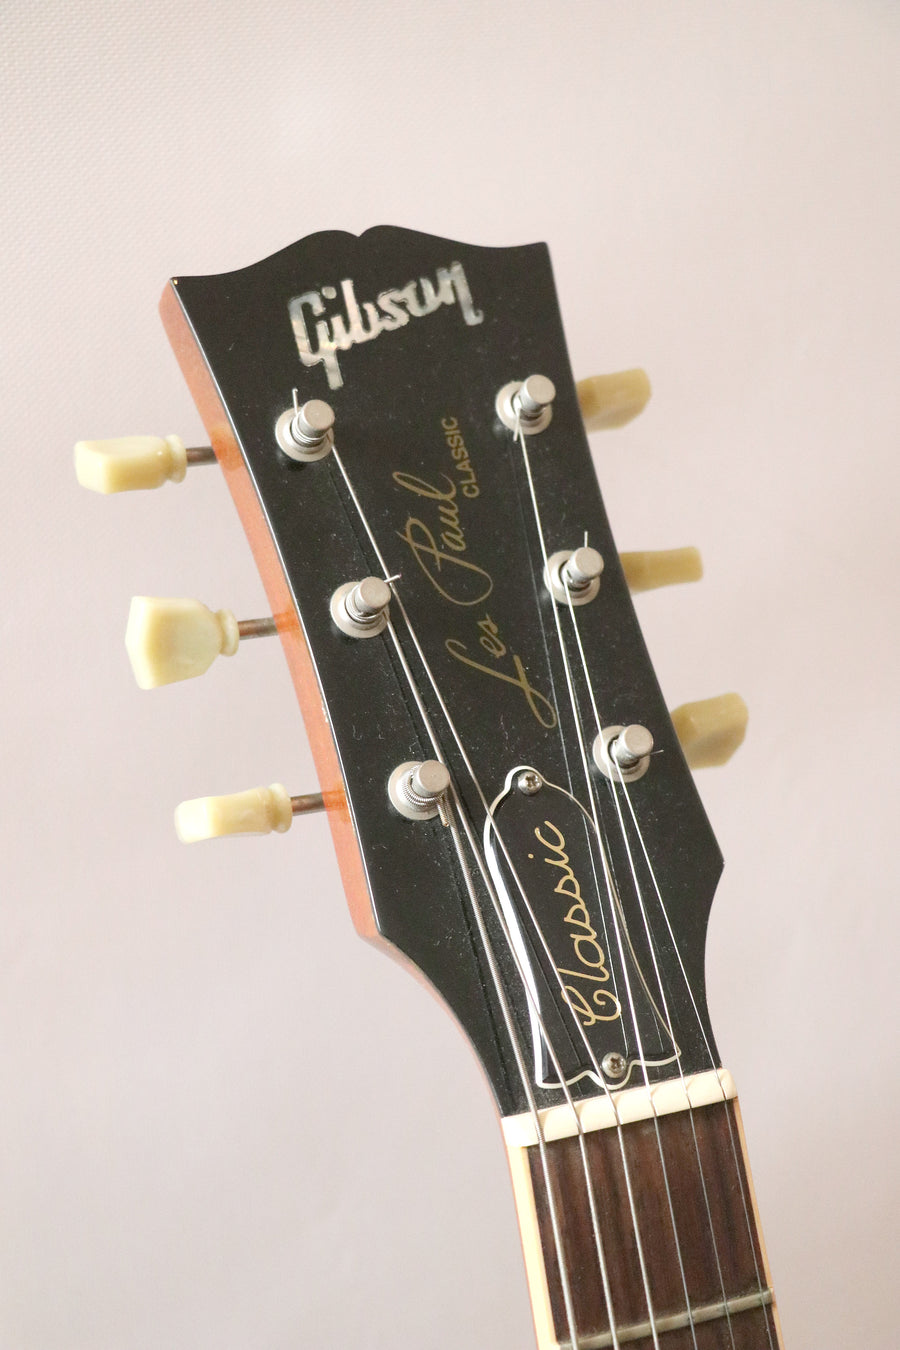 Gibson Les Paul Classic 2000